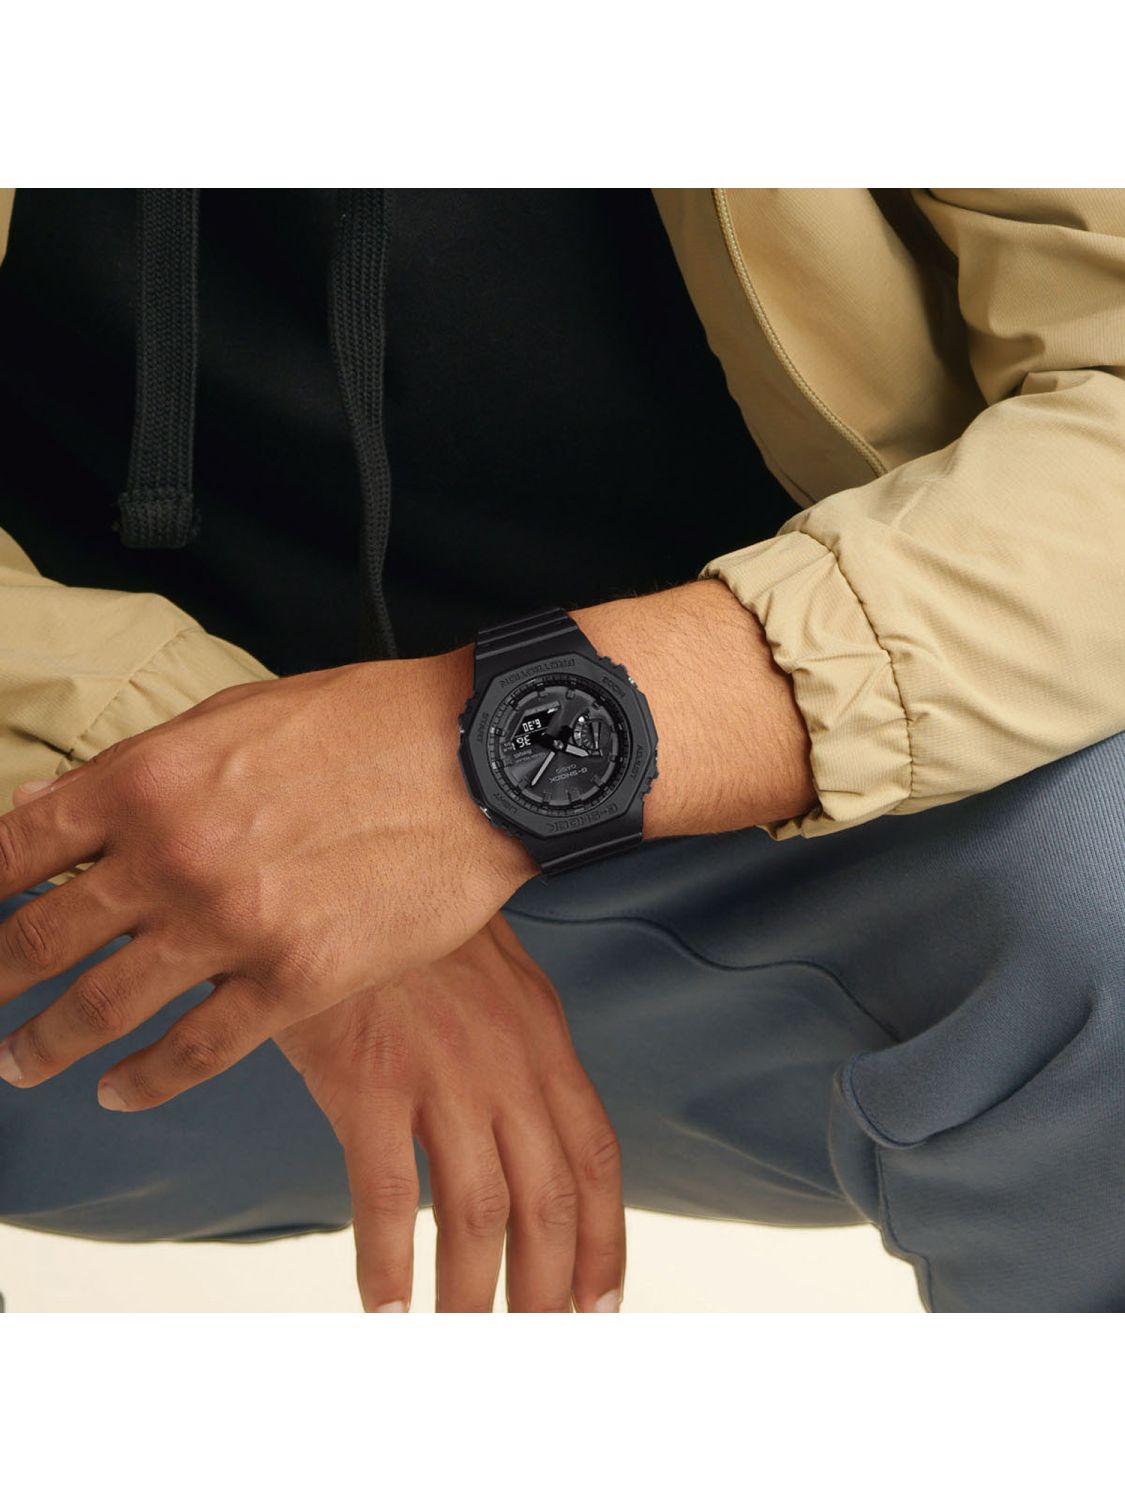 Men\'s Black Watch Bluetooth GA-B2100-1A1ER uhrcenter • G-Shock Classic Solar Casio